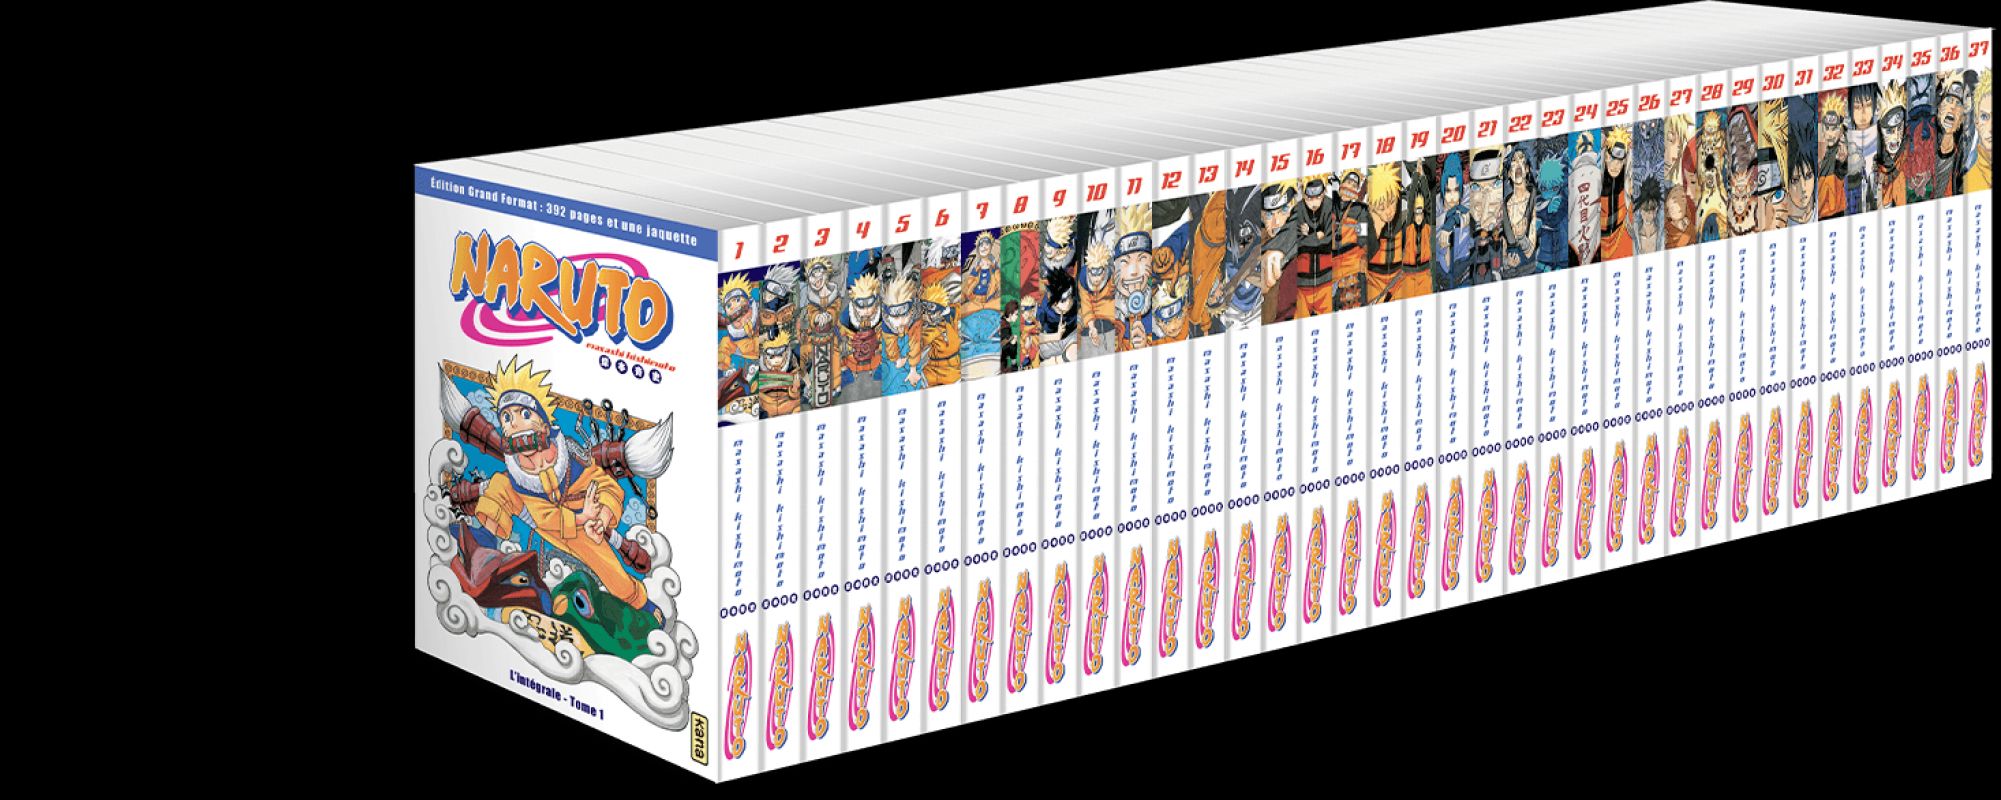 Naruto revient dans une édition collector grand format ! 